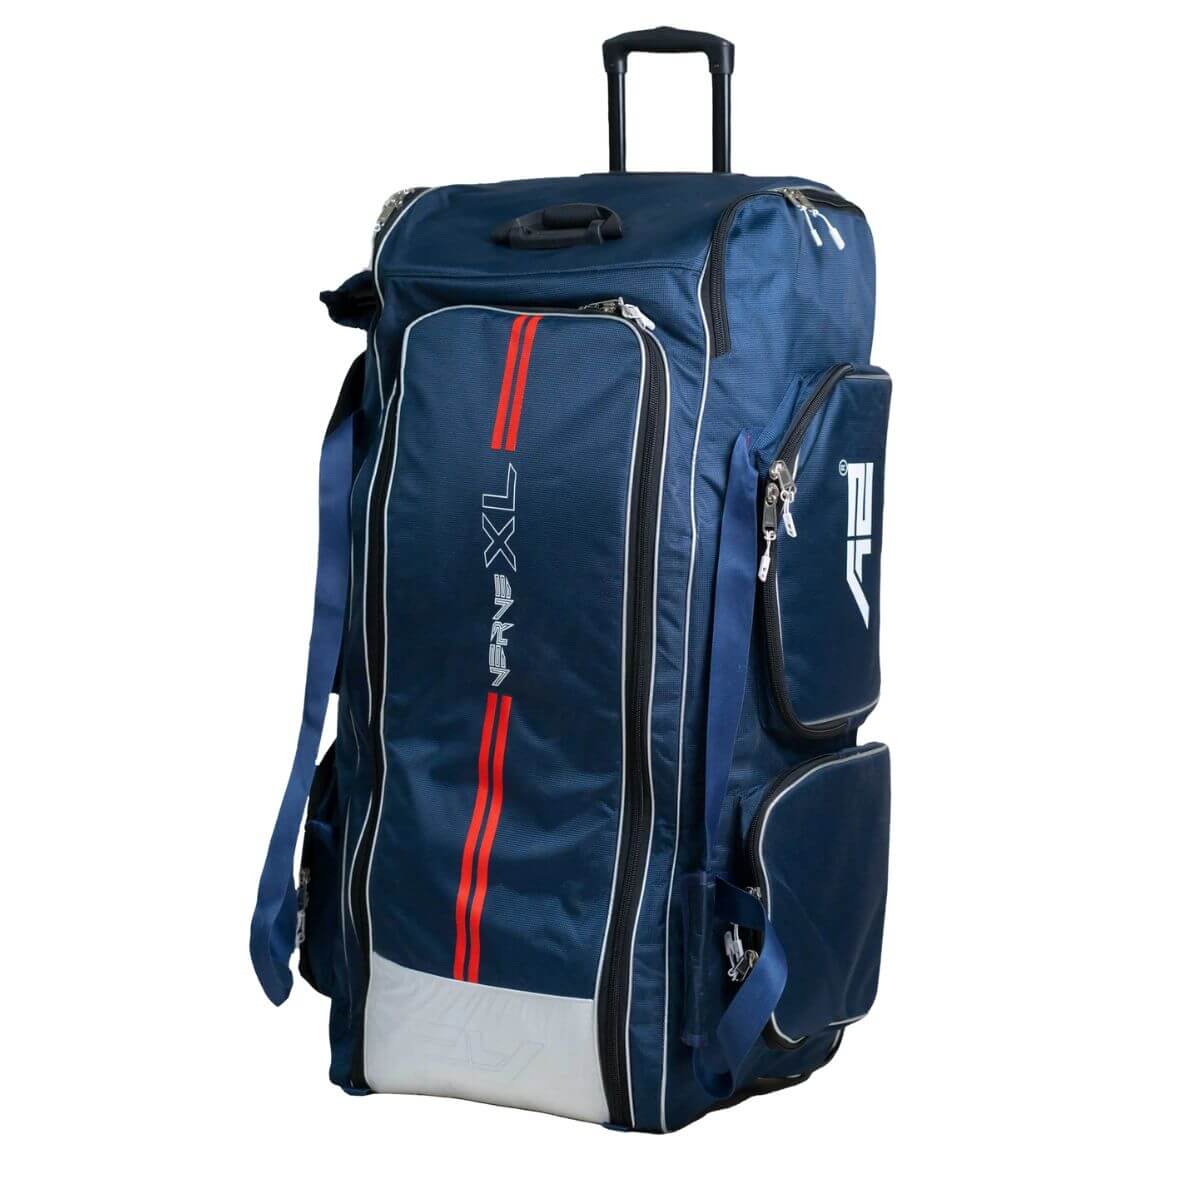 Kookaburra Pro 4.0 Wheelie Cricket Bag – Sturdy Sports